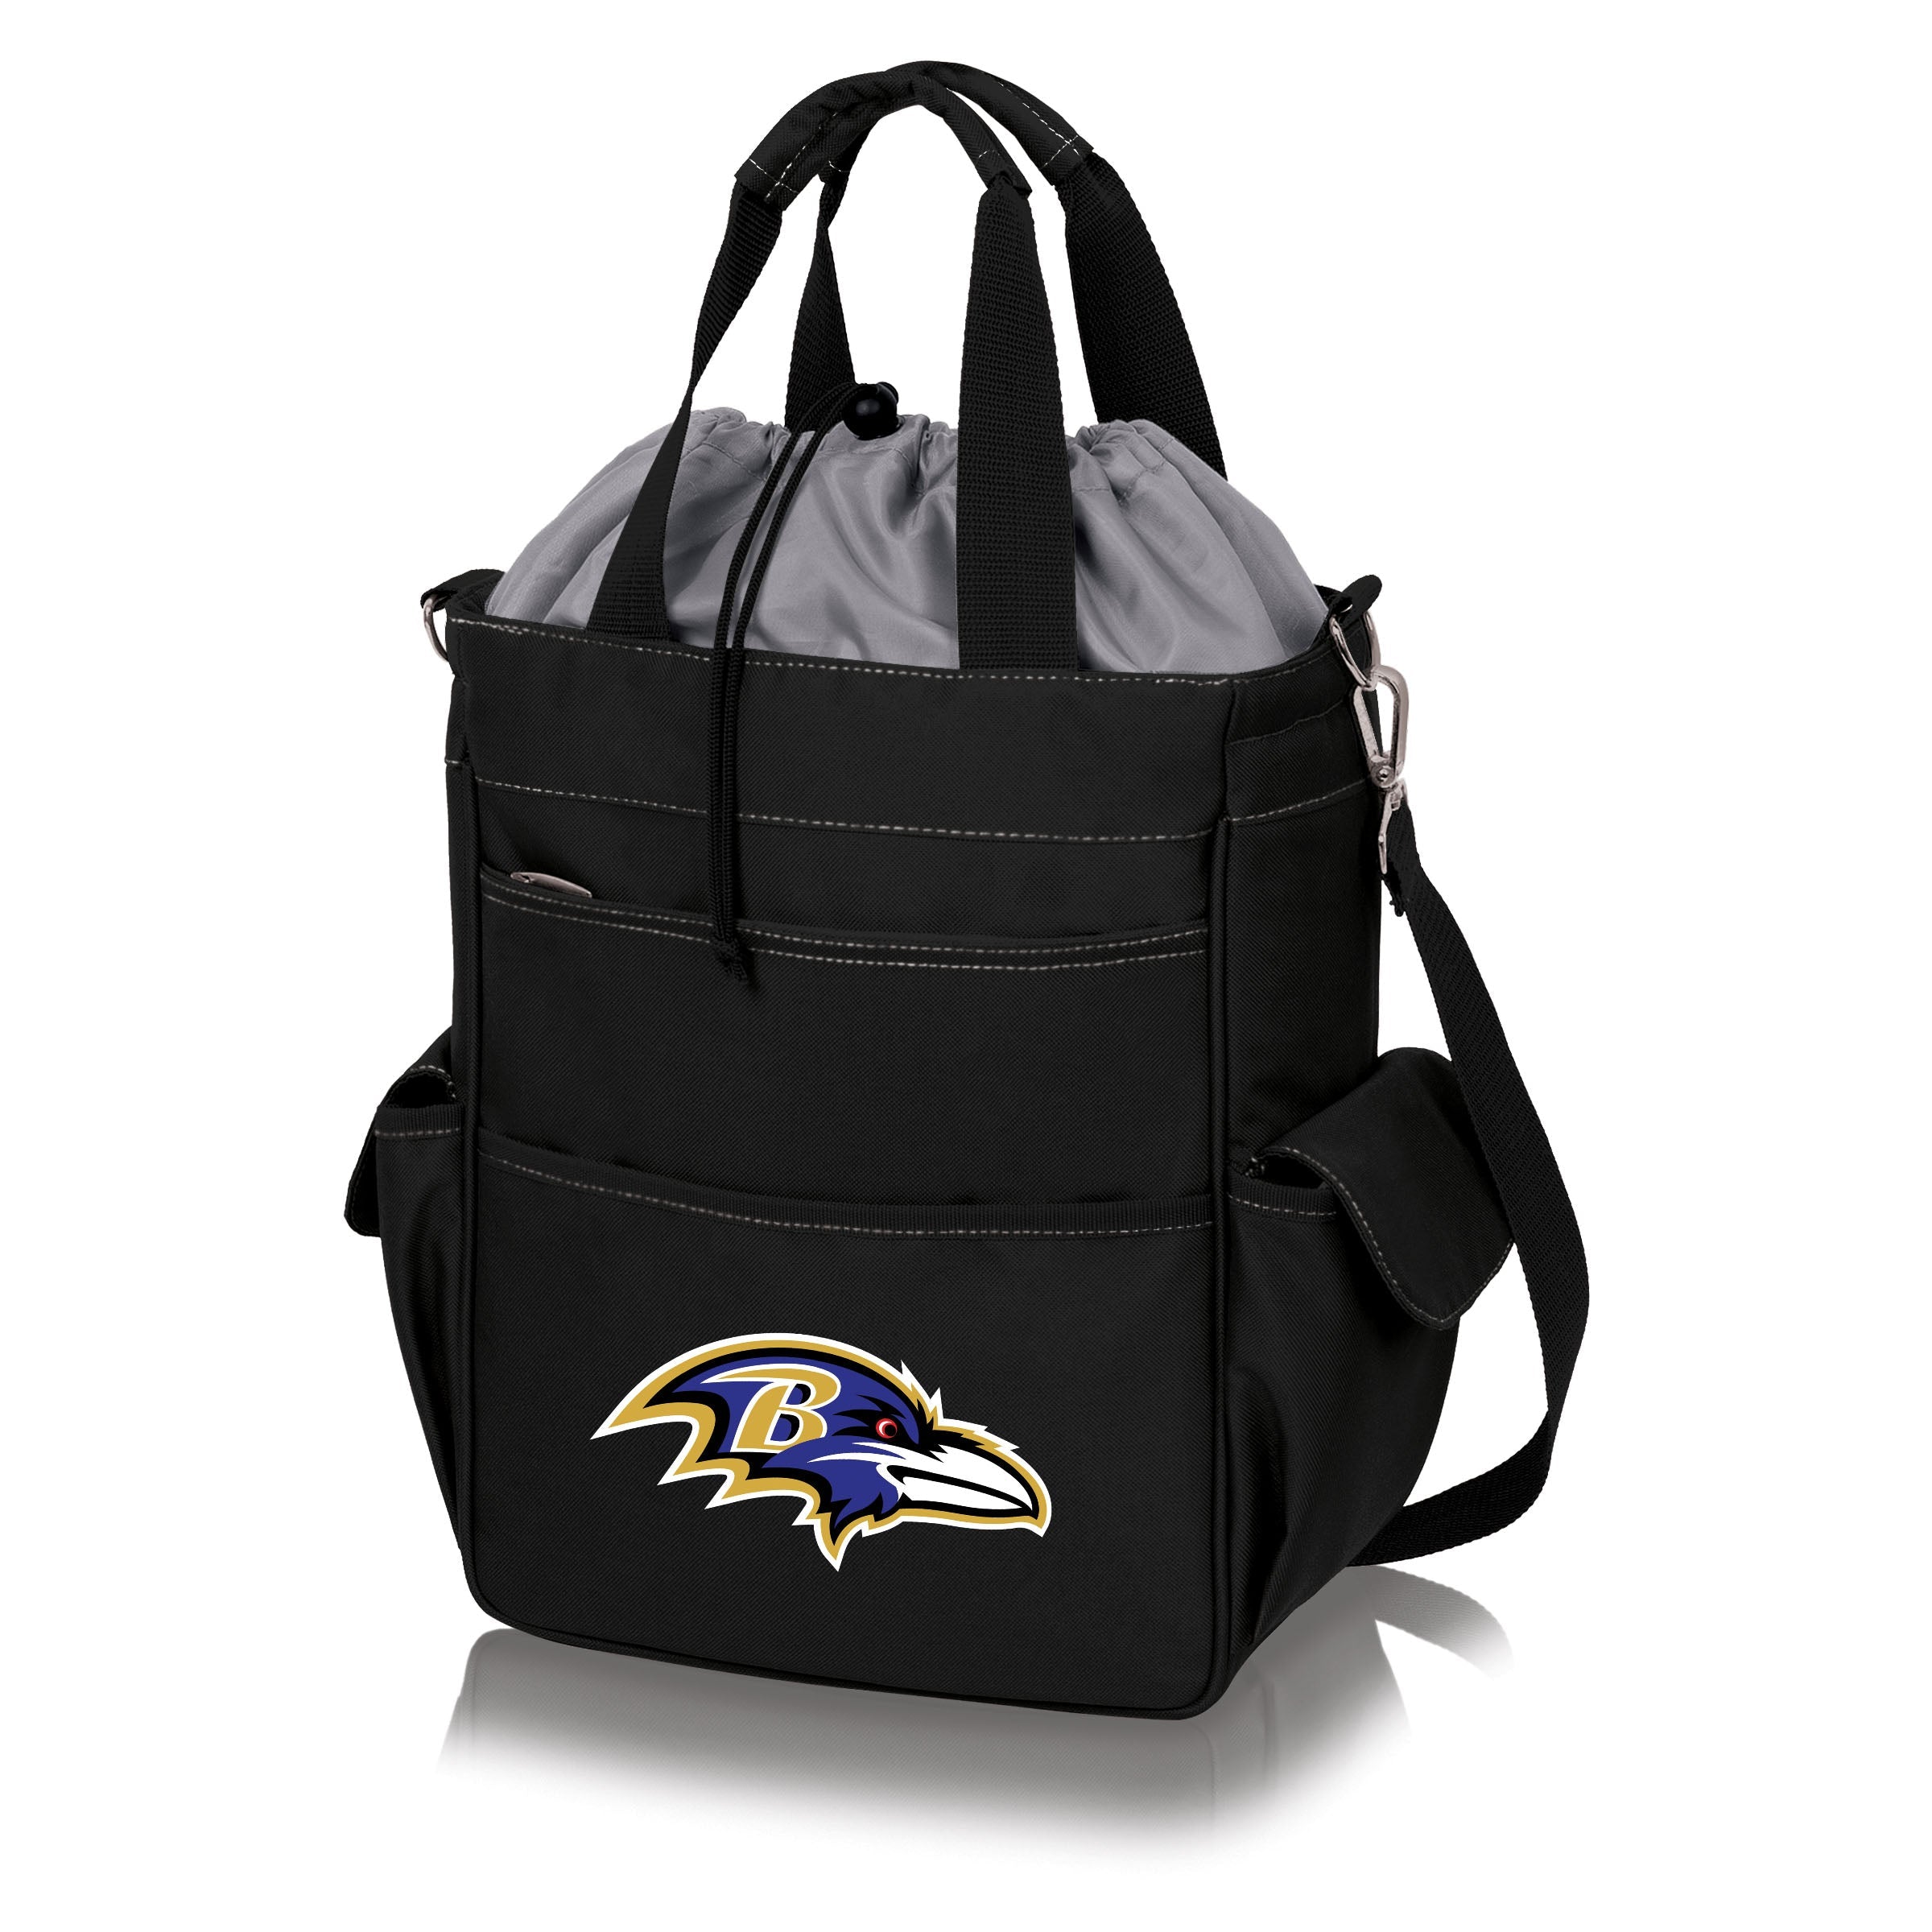 Baltimore Ravens - Activo Cooler Tote Bag